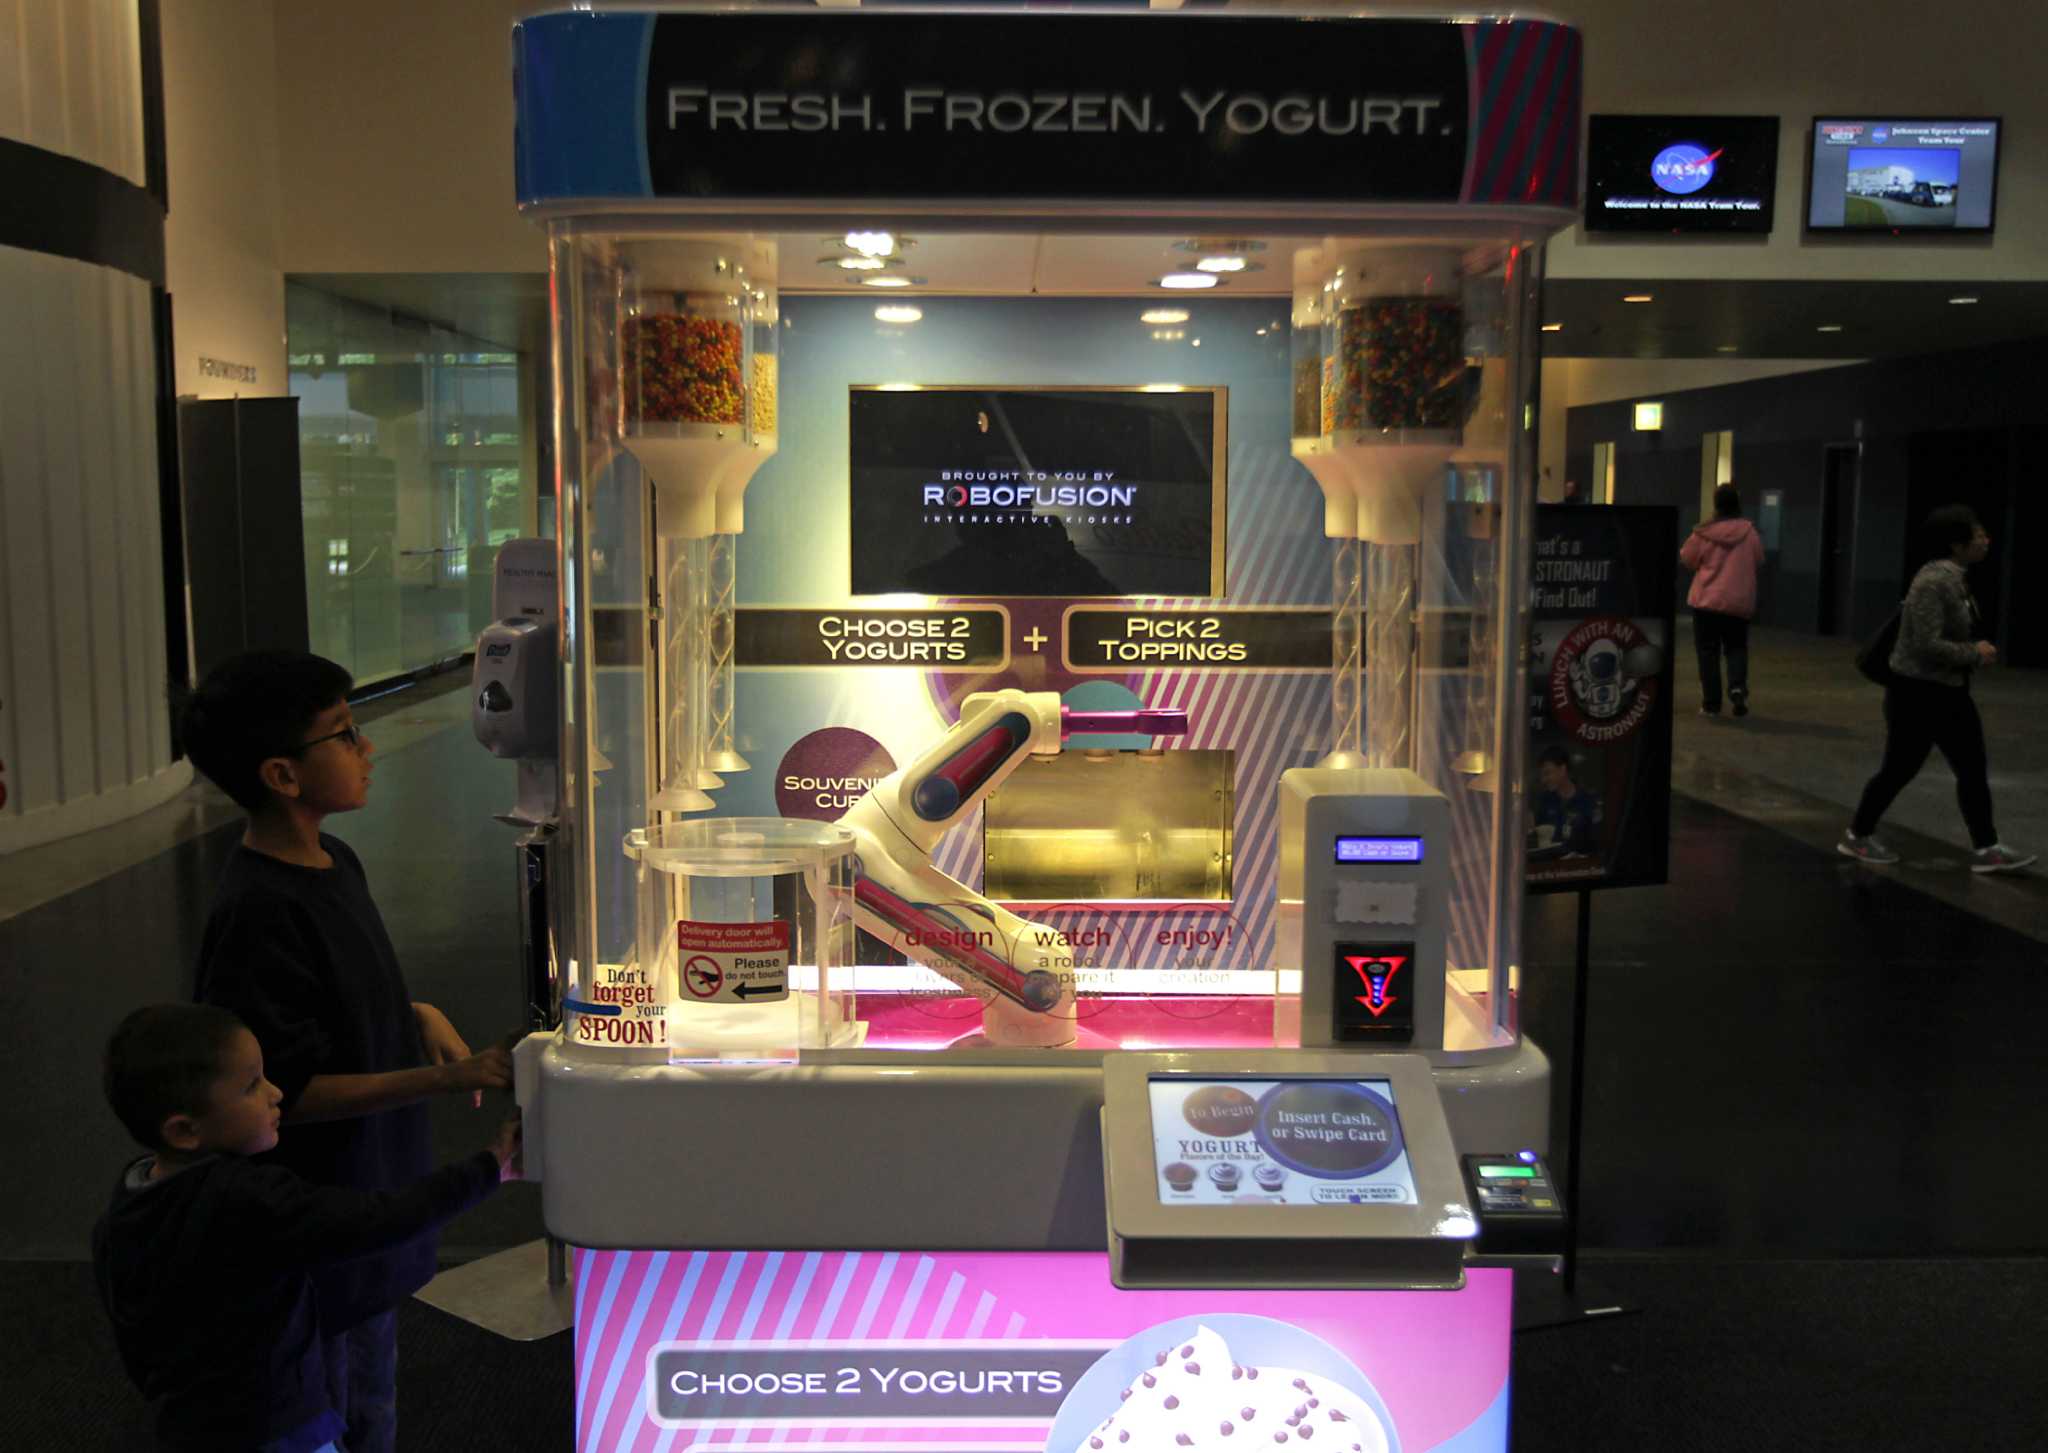 Reis & Irvy's Robotic Frozen Yogurt Robot